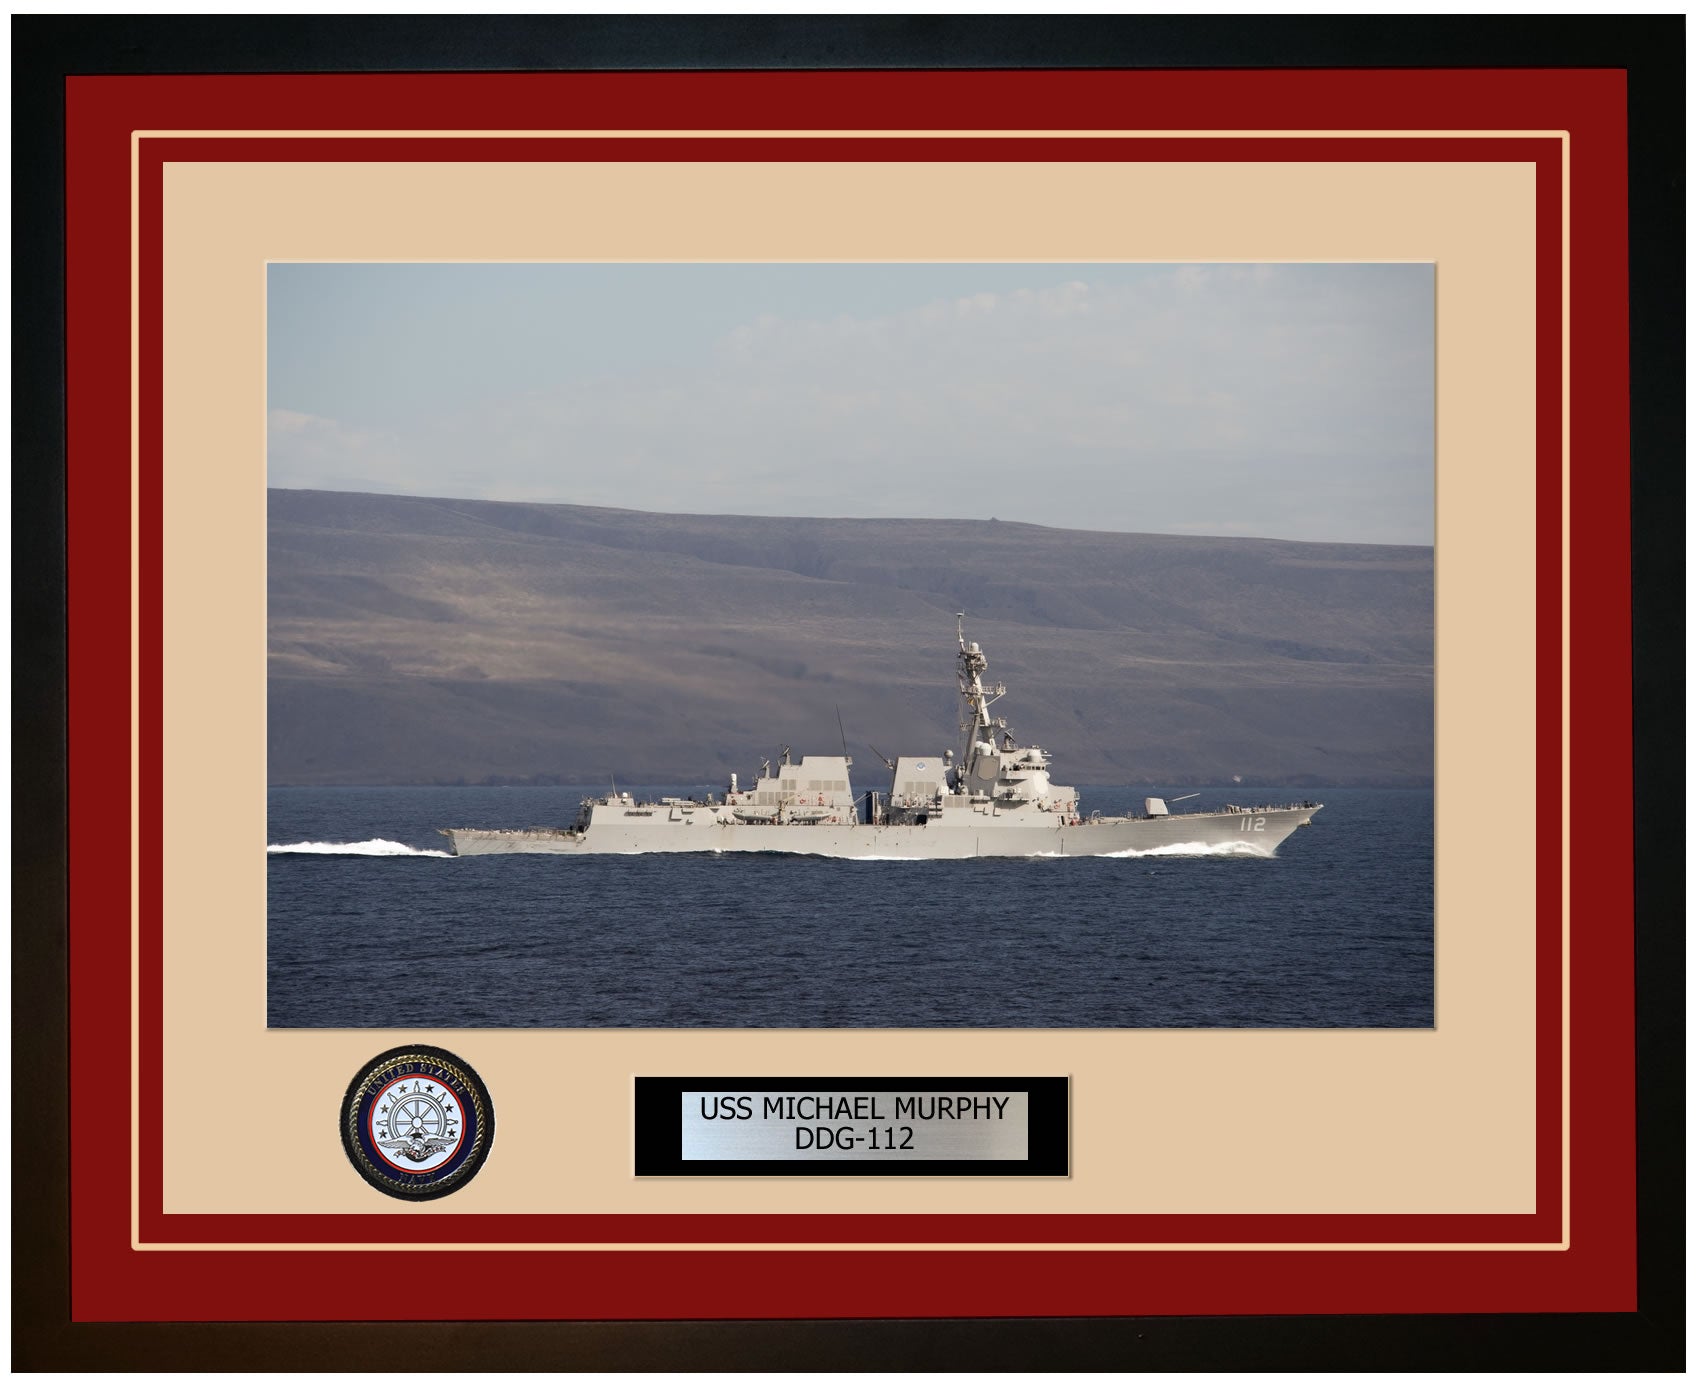 USS MICHAEL MURPHY DDG-112 Framed Navy Ship Photo Burgundy